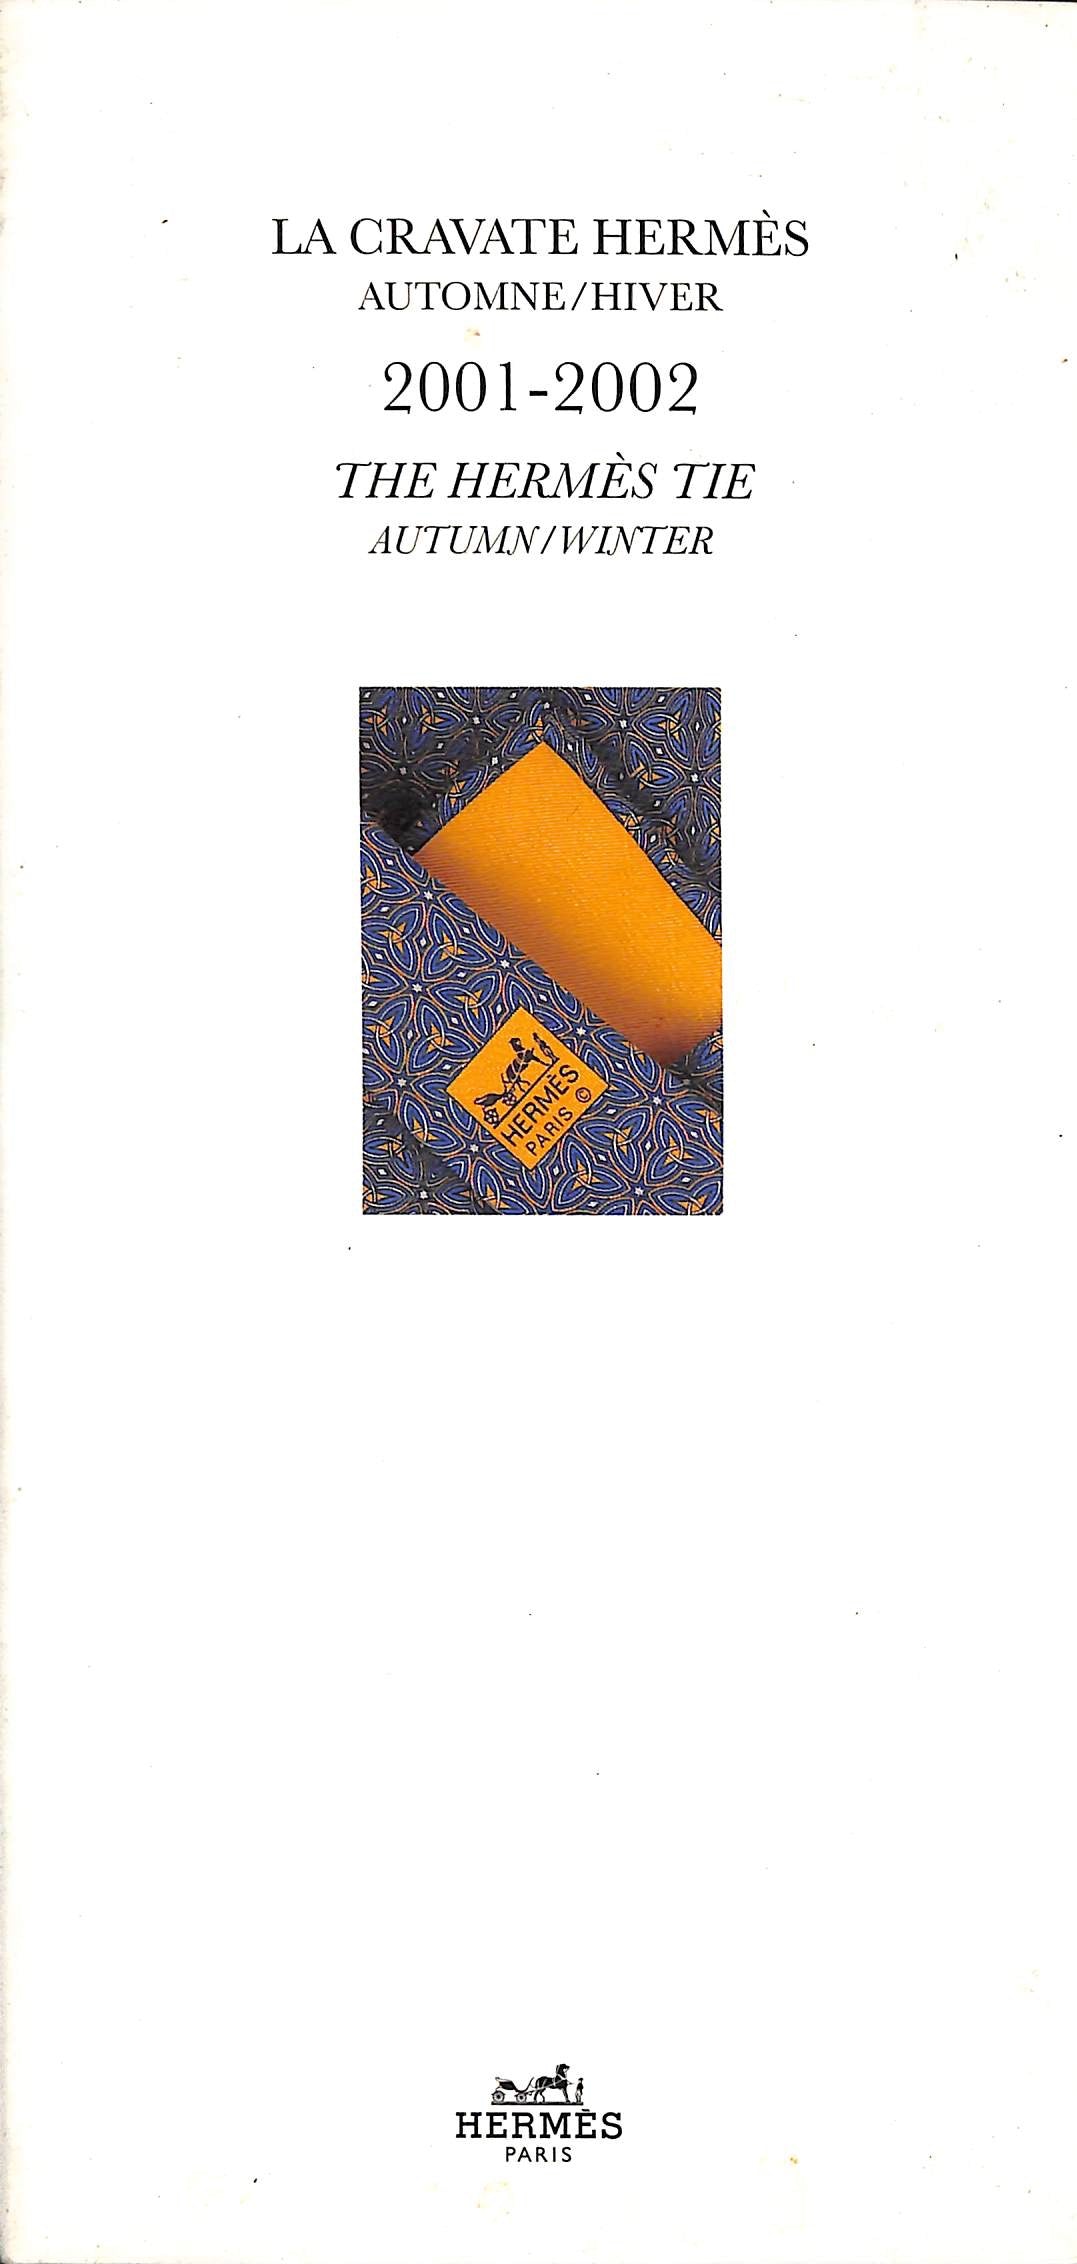 The Hermes Tie Autumn/Winter 2001-2002